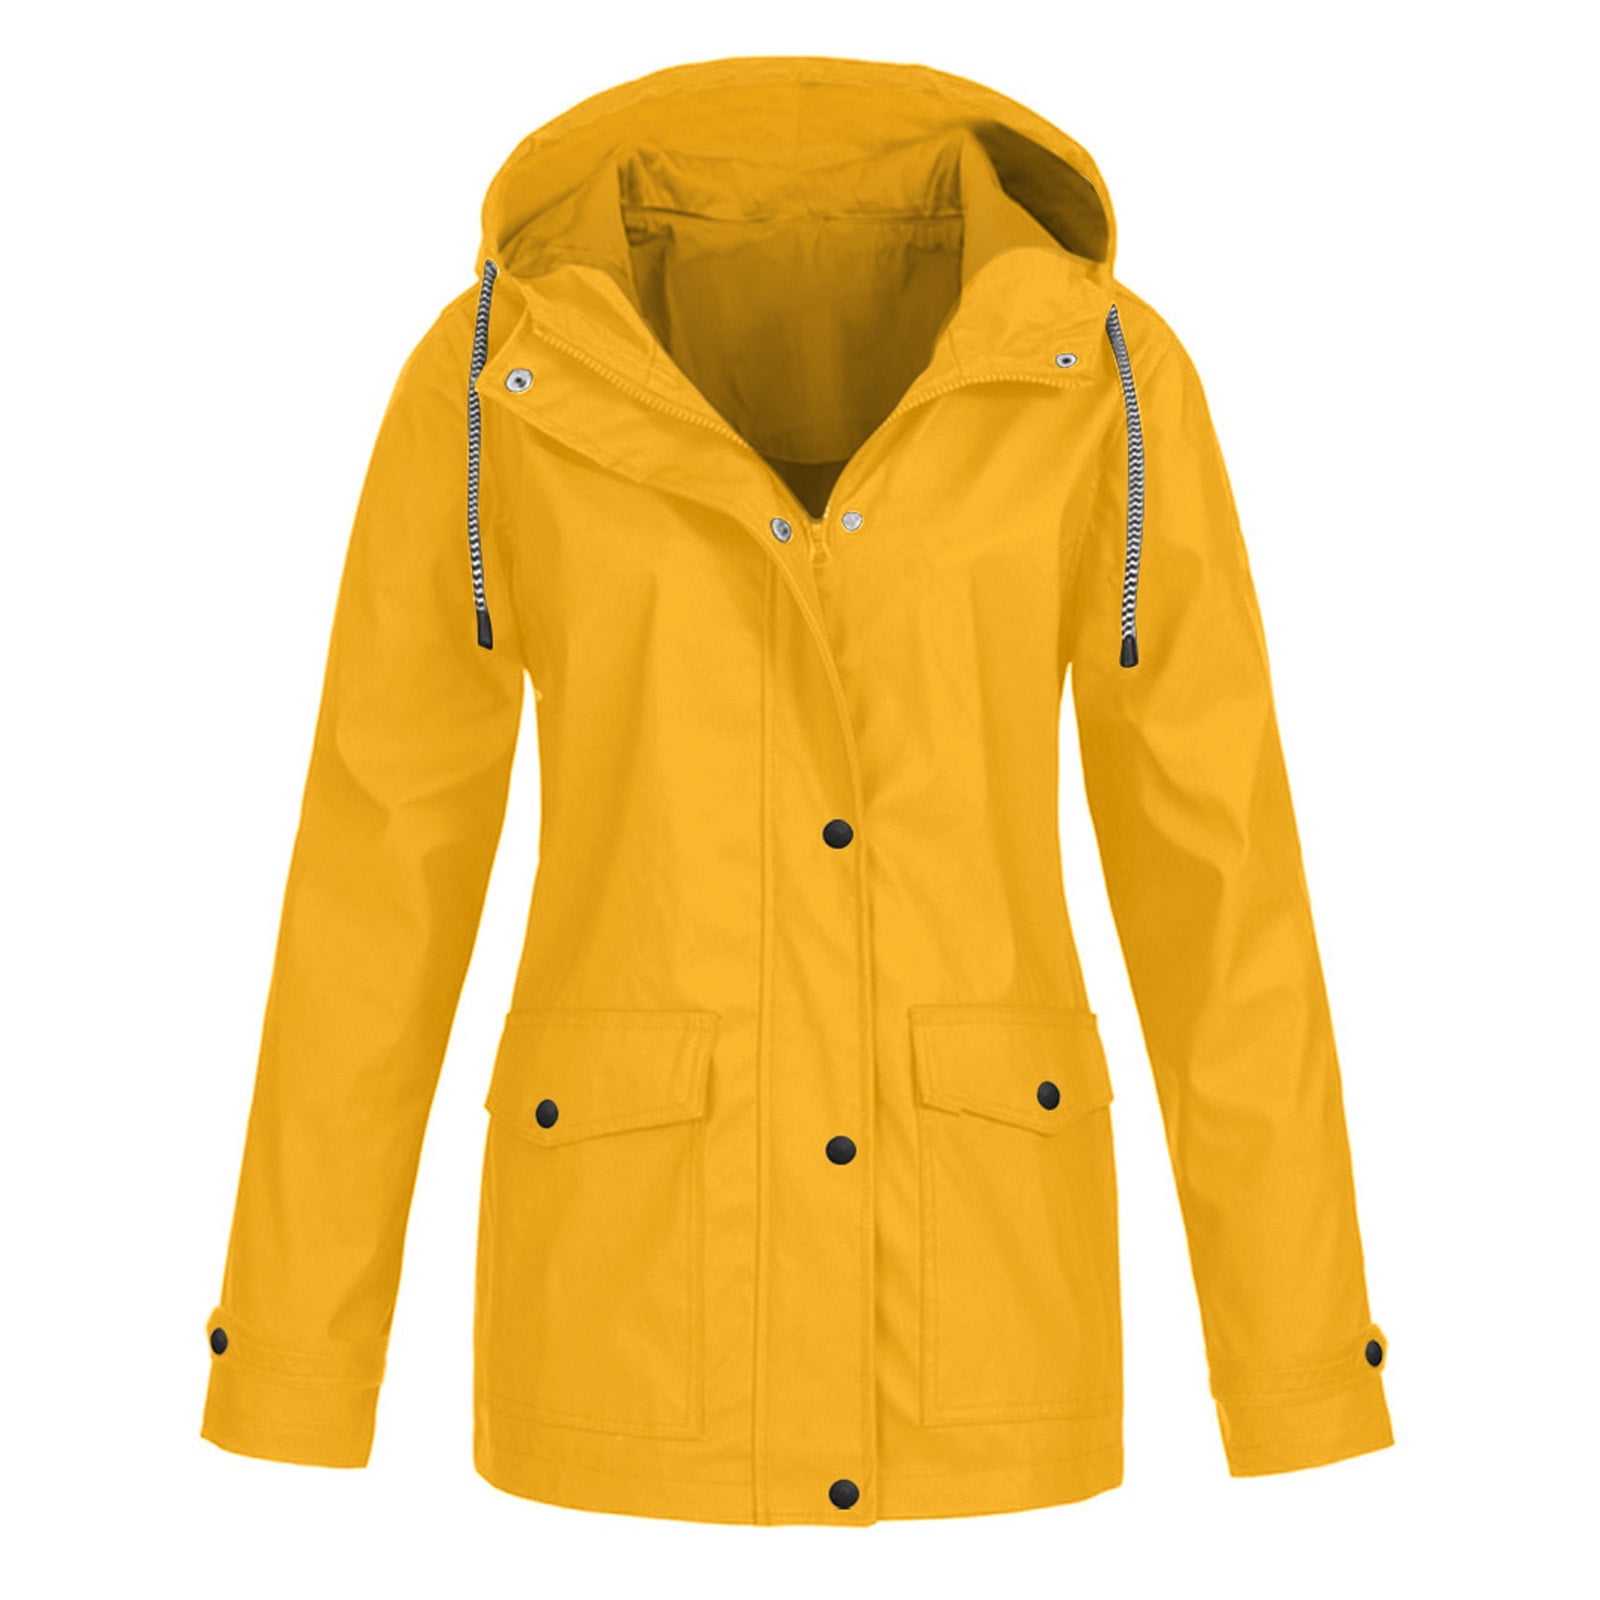 Leesechin Rain Jackets for Women Clearance Solid Rain Jacket Outdoor ...